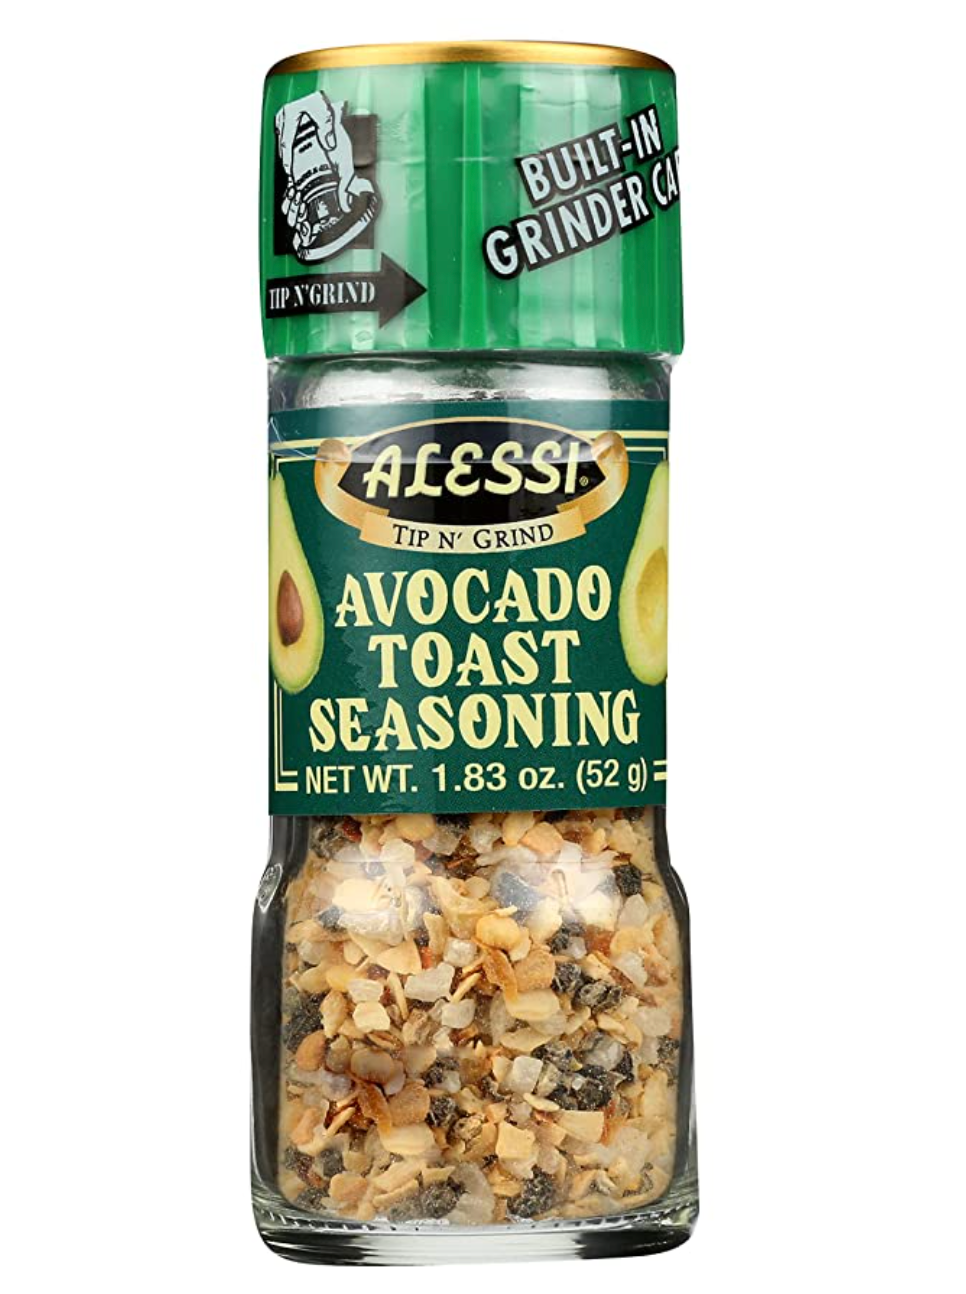 Avocado Toast Seasoning